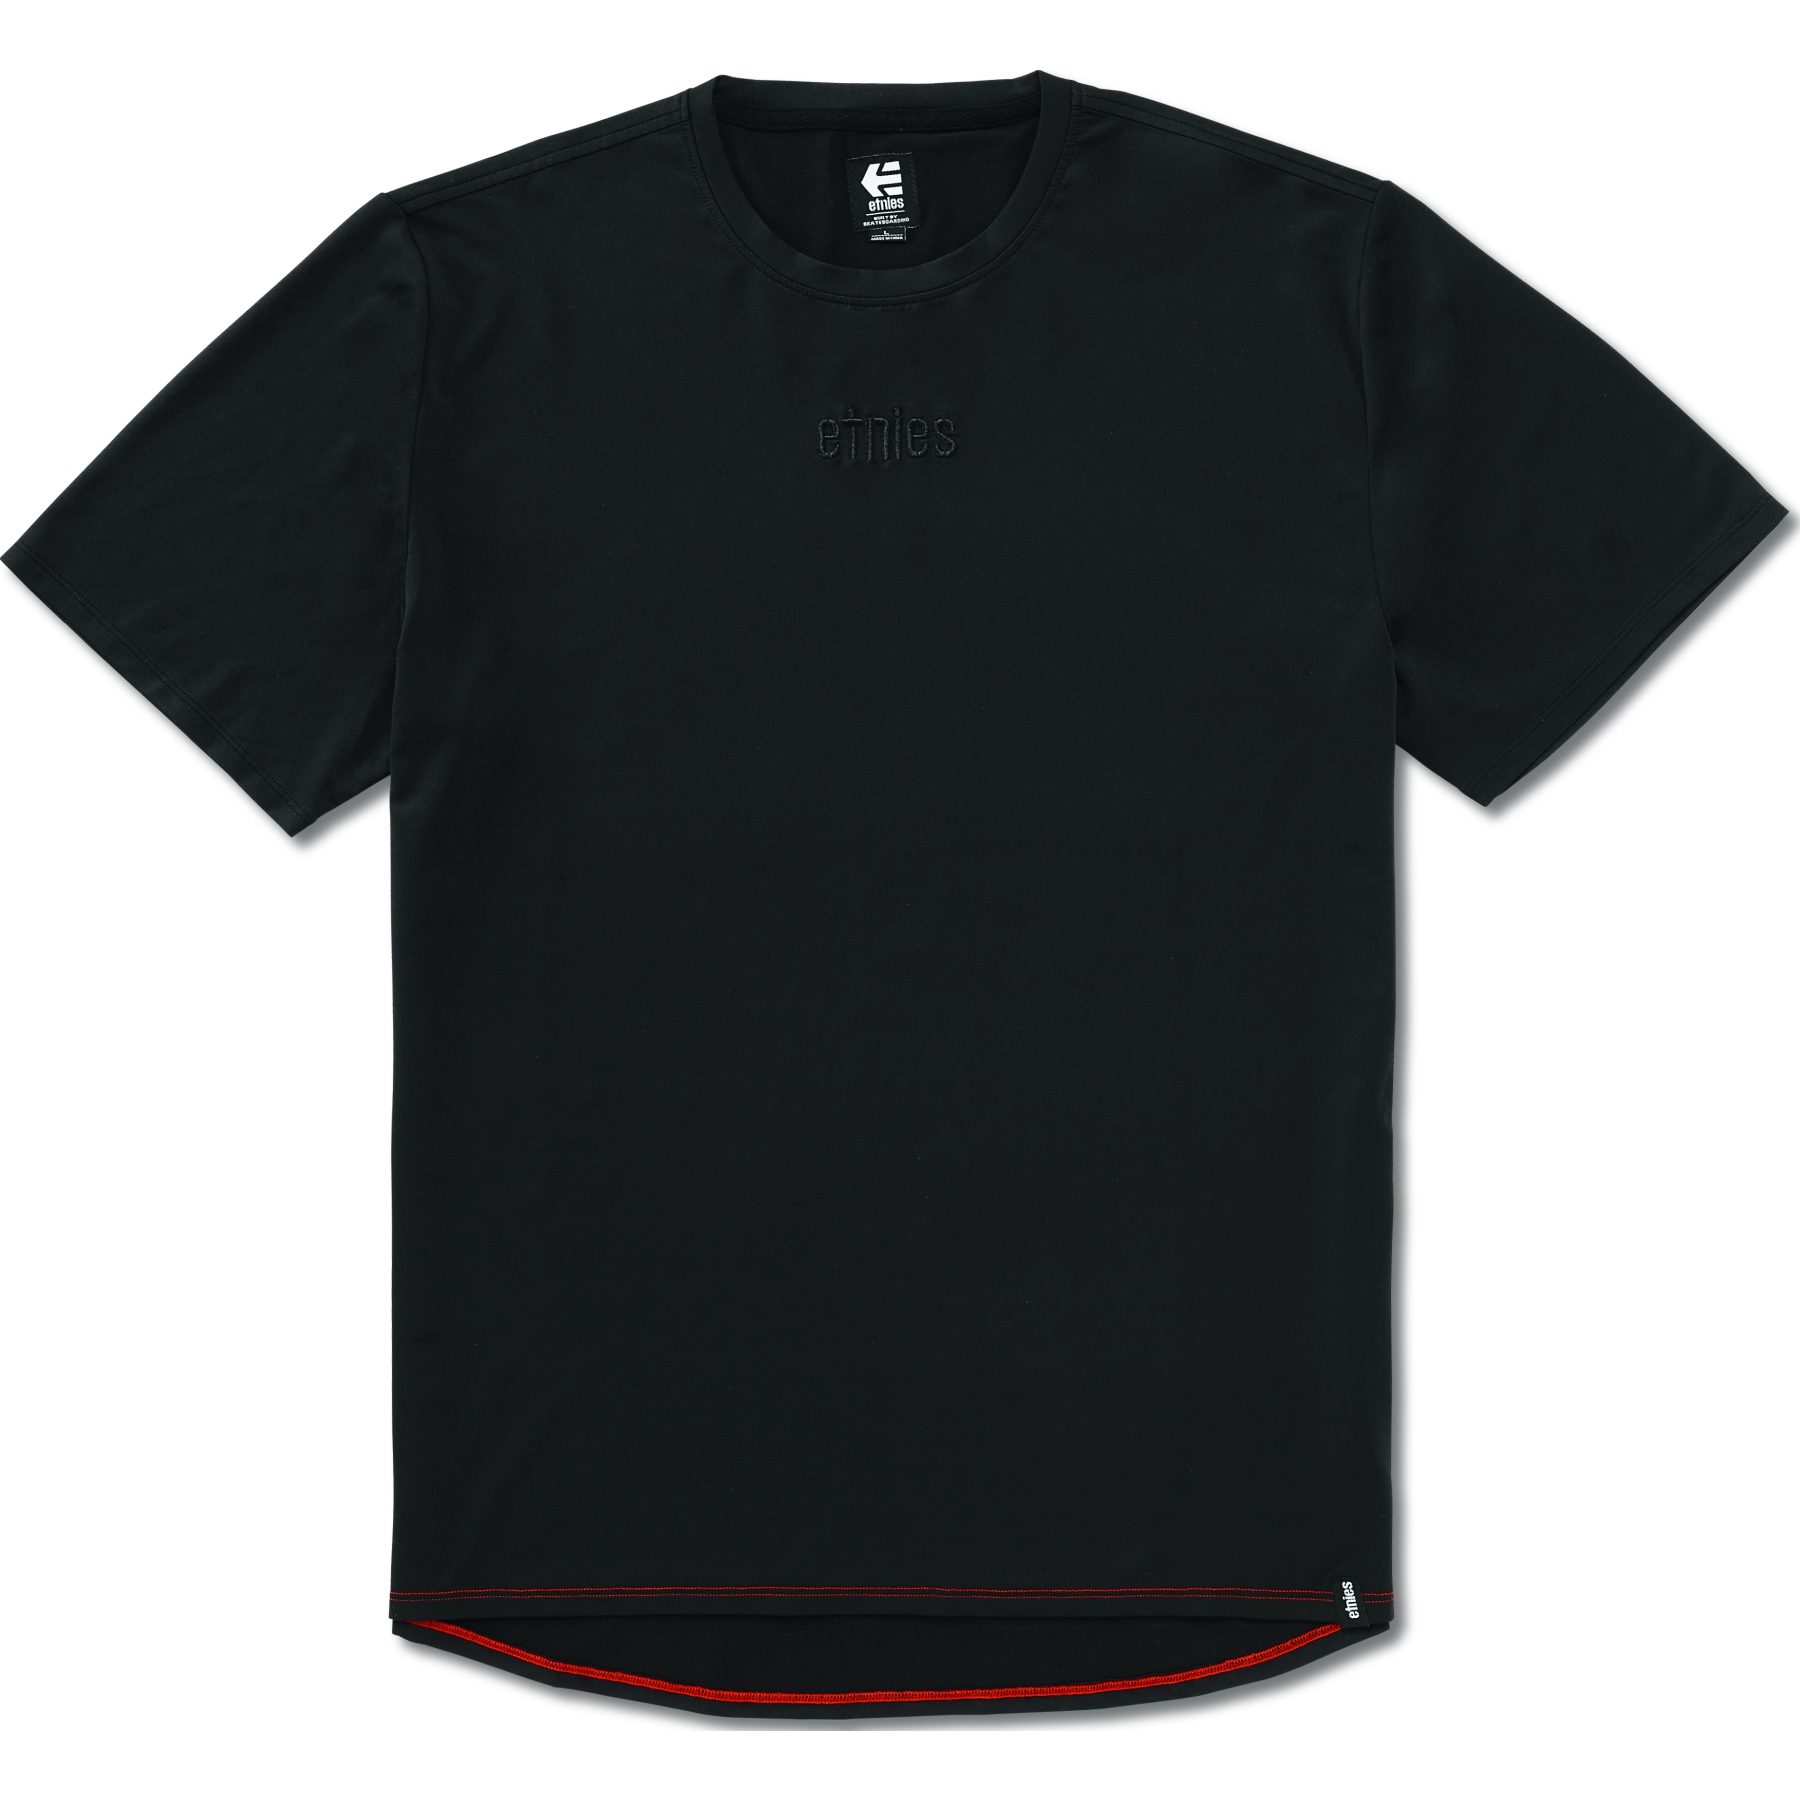 Productfoto van etnies Trailblazer Fietsshirt - zwart